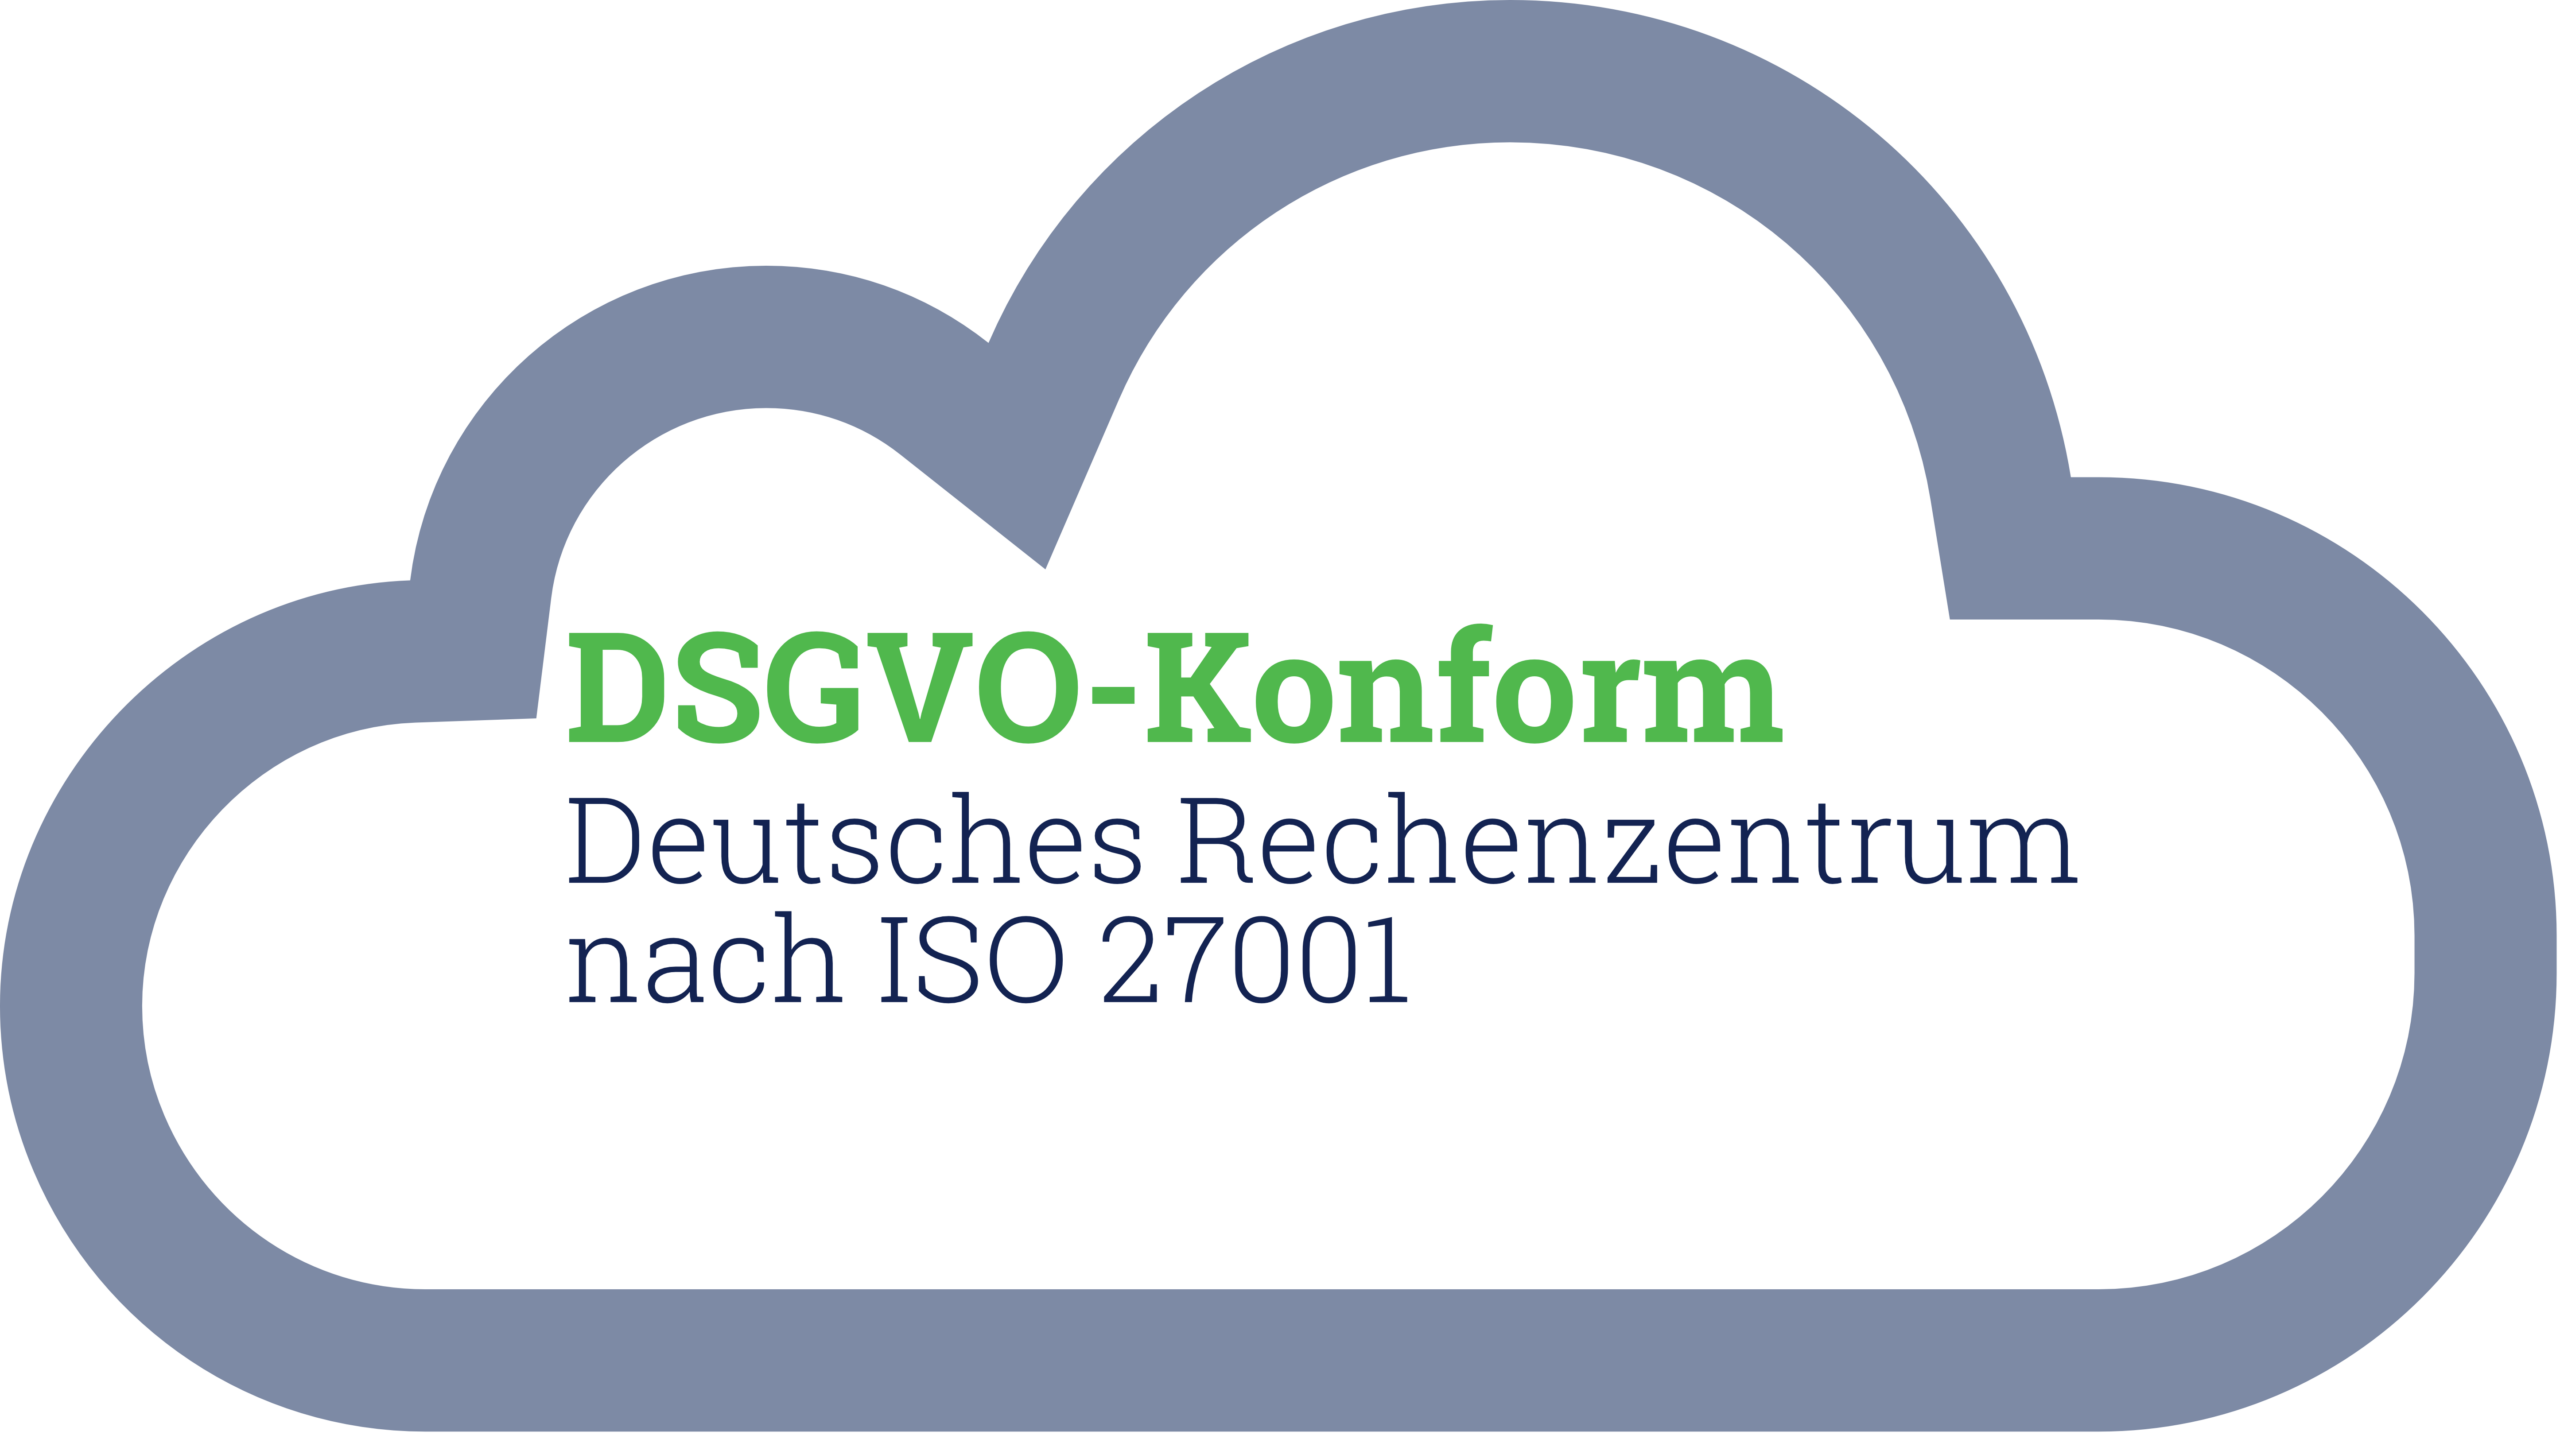 DSGVO-Konform wasabi Cloud